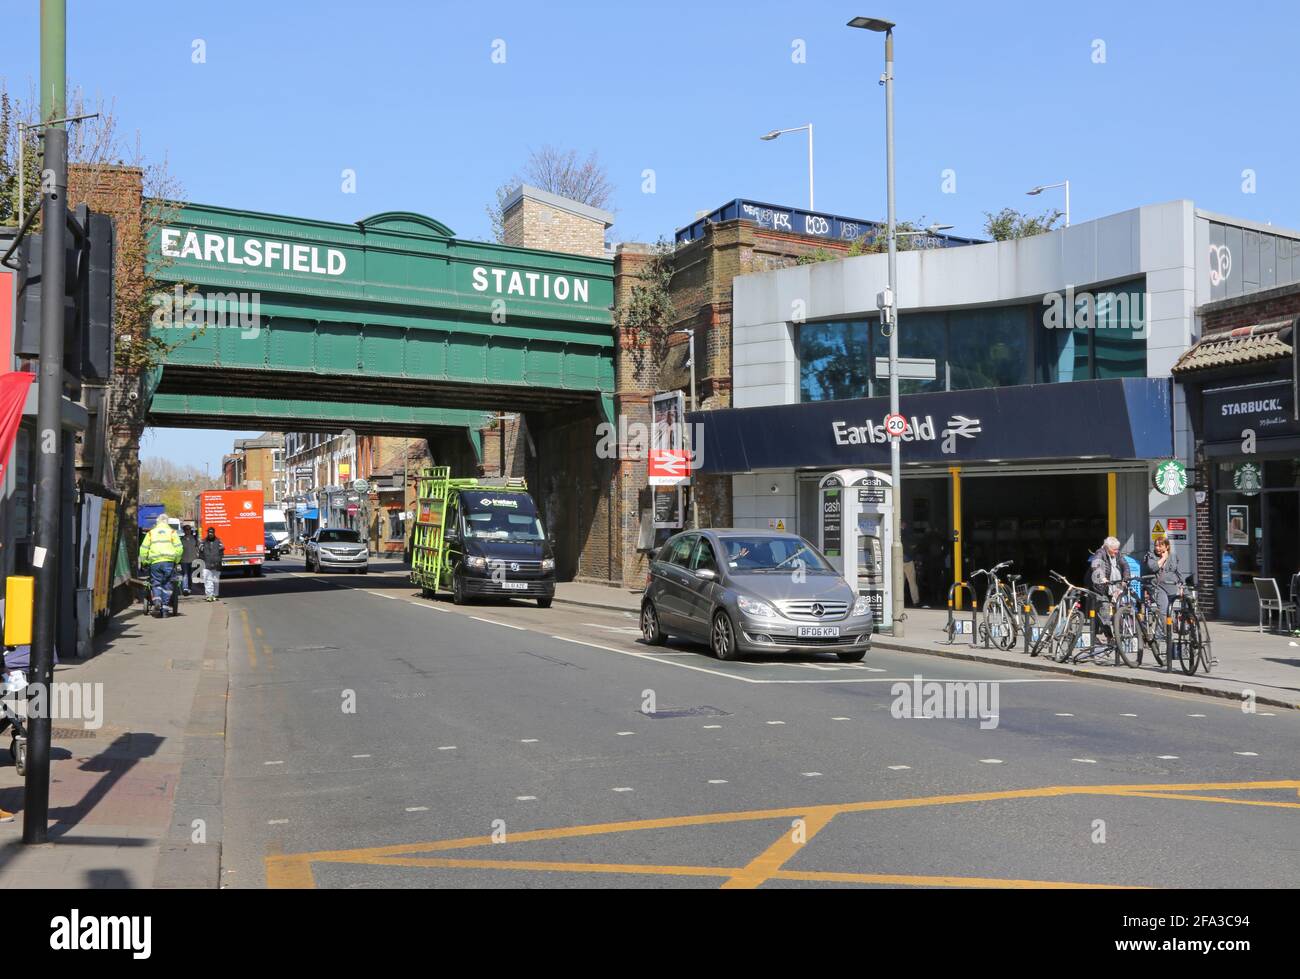 Earlsfield Station, Garratt Lane, southwest London, UK Stock Photo - Alamy